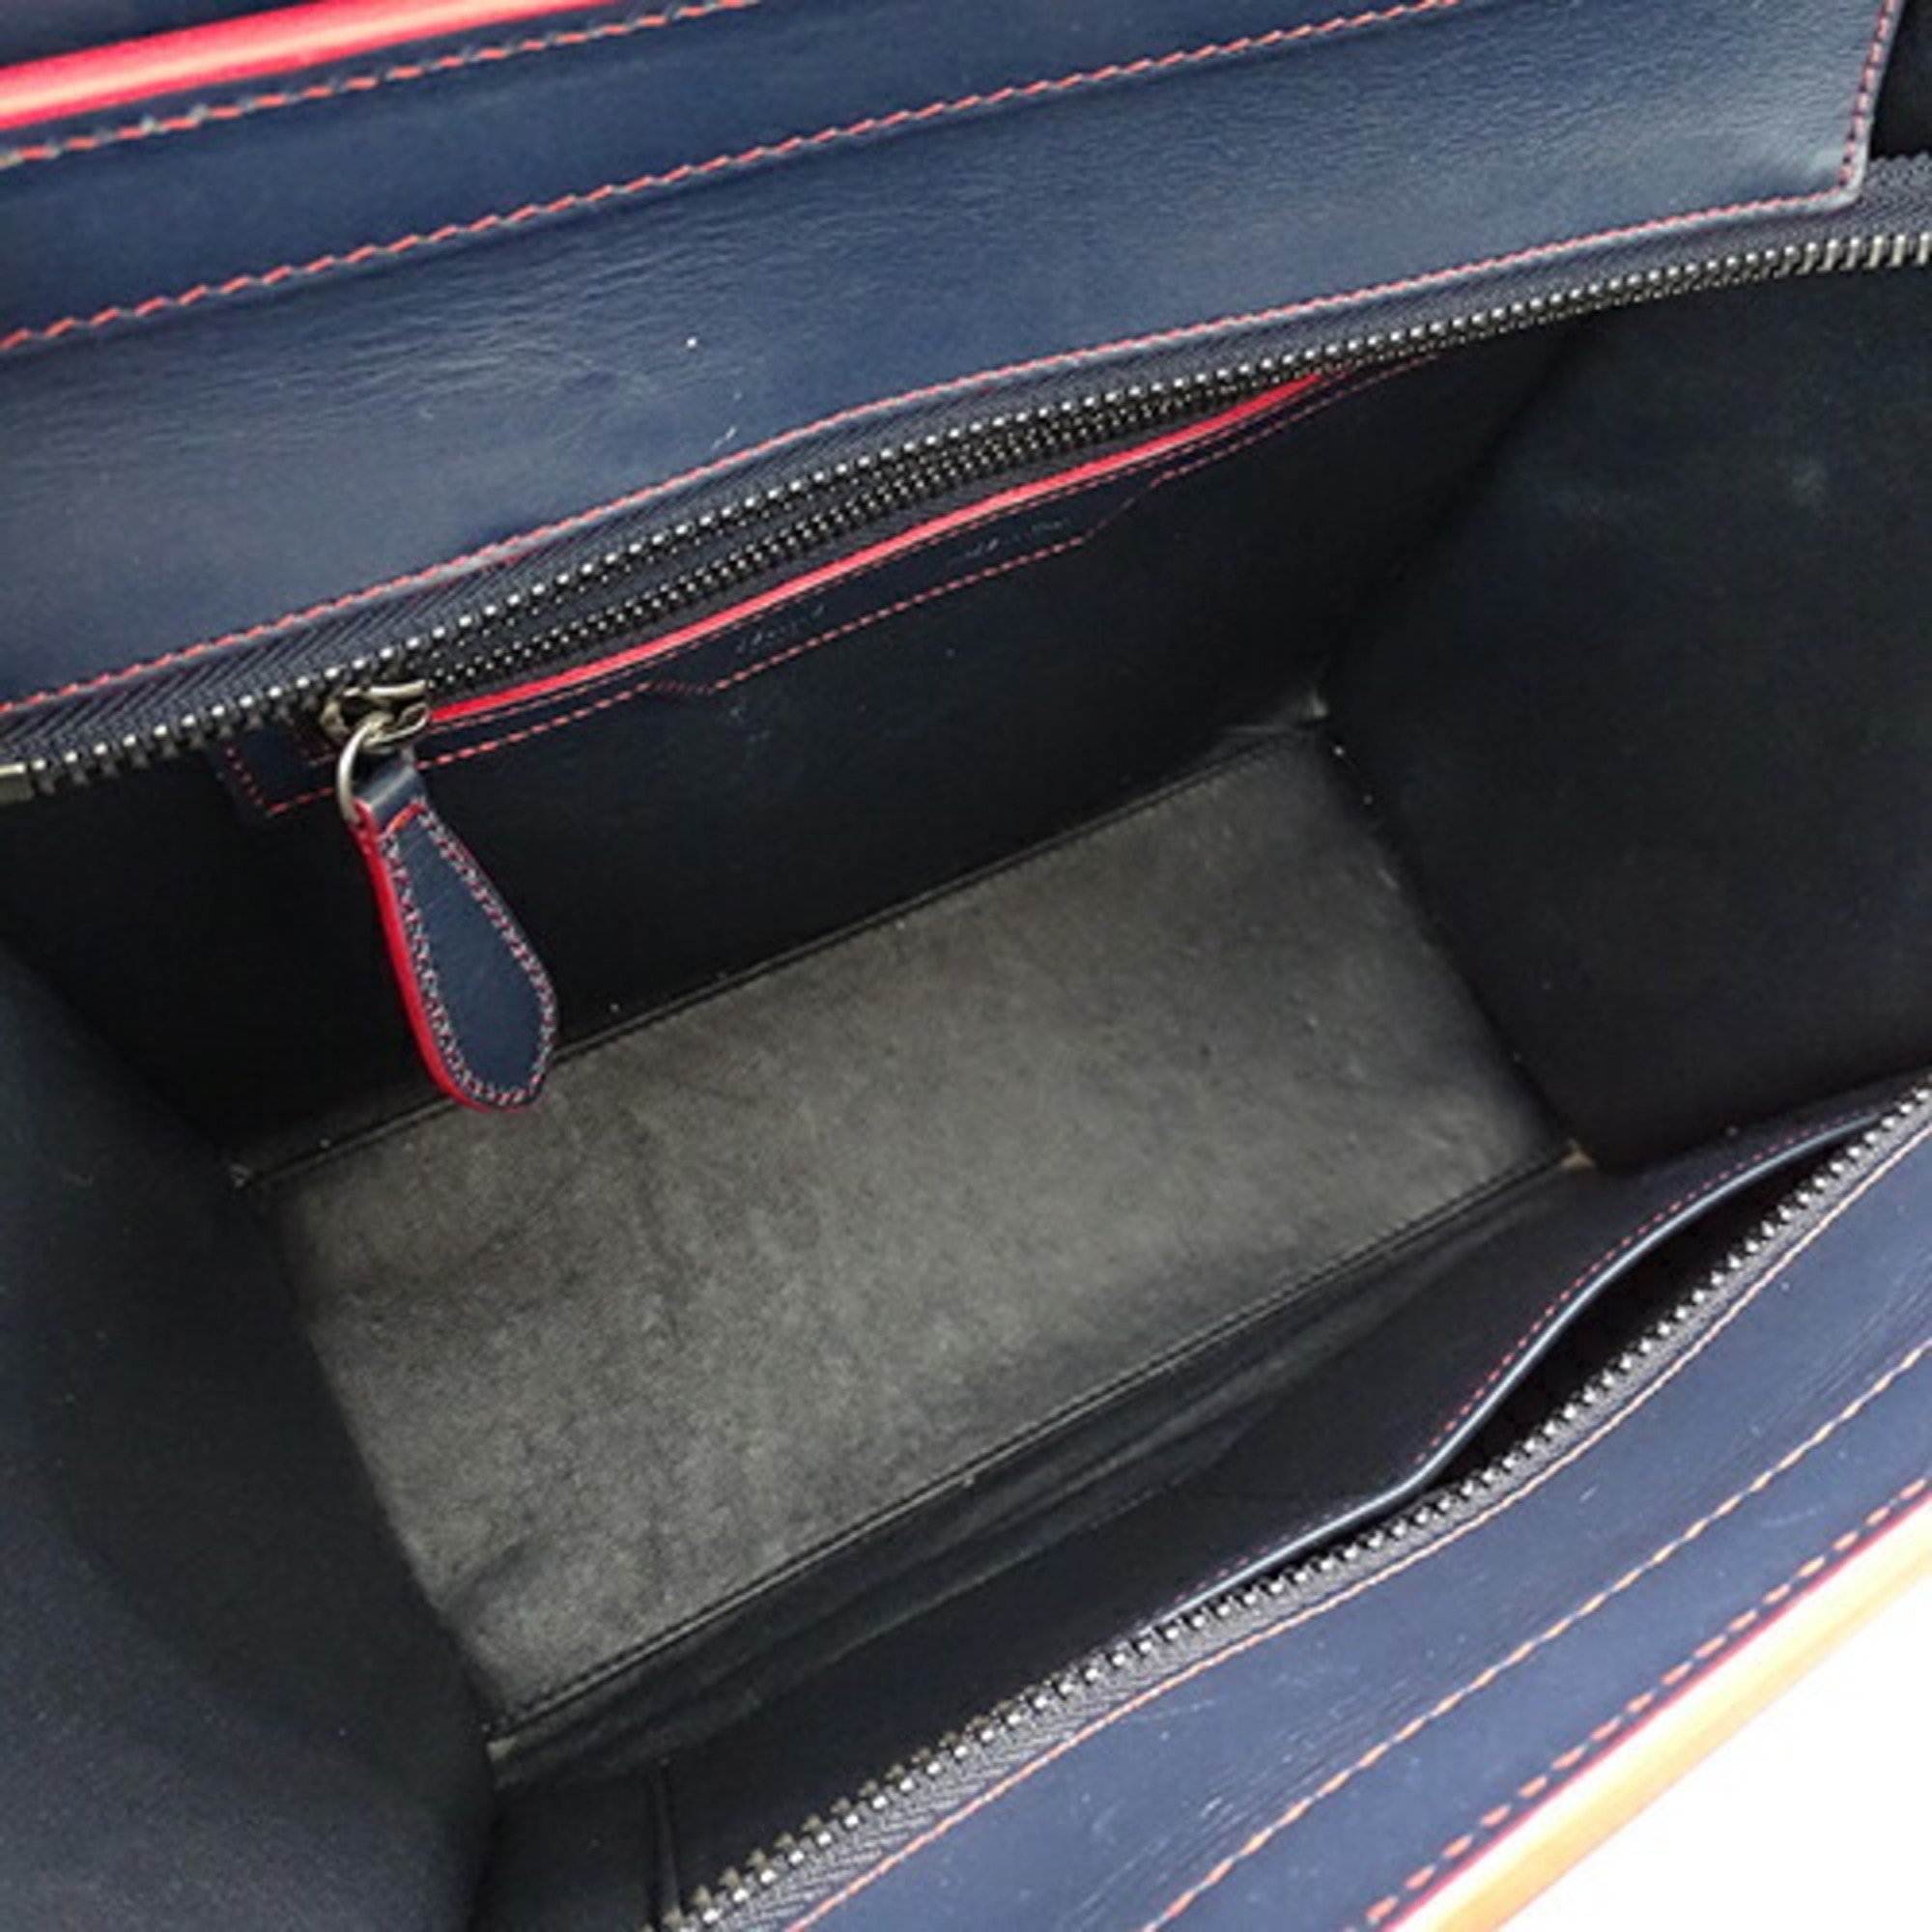 CELINE Women's Handbag Leather Luggage Micro Shopper Navy Red